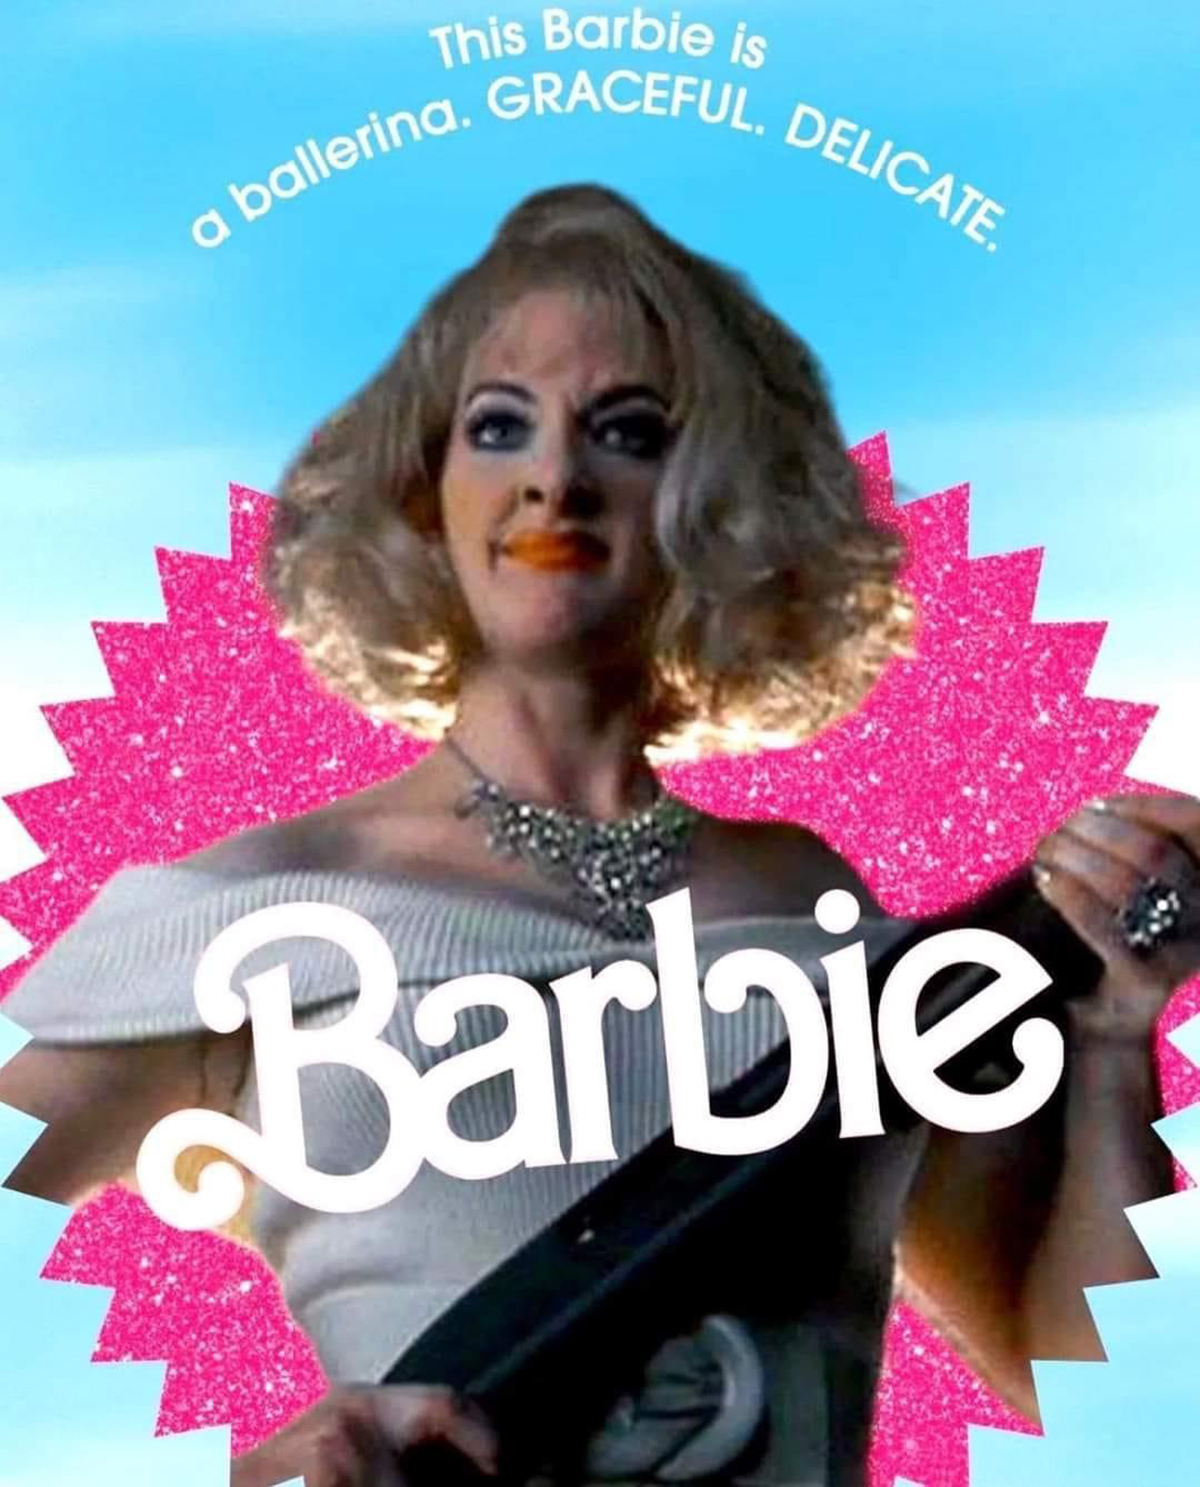 fresh memes - barbie instagram trend - This Barbie is a ballerina. Graceful. Delicate. Barbie 404